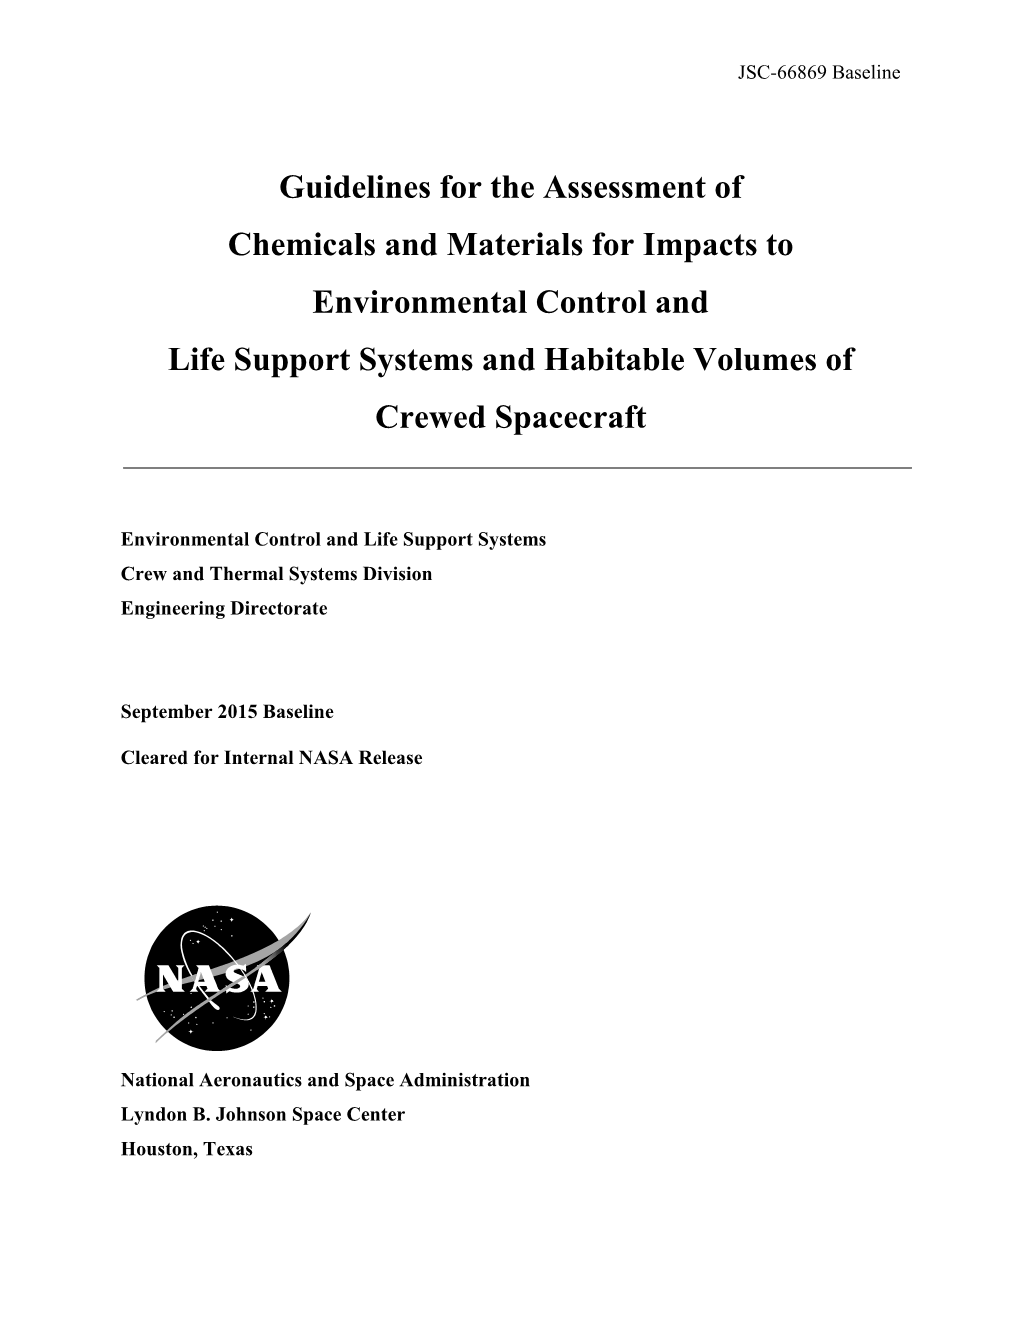 ECLSS Assessments Sept-2015 Baseline